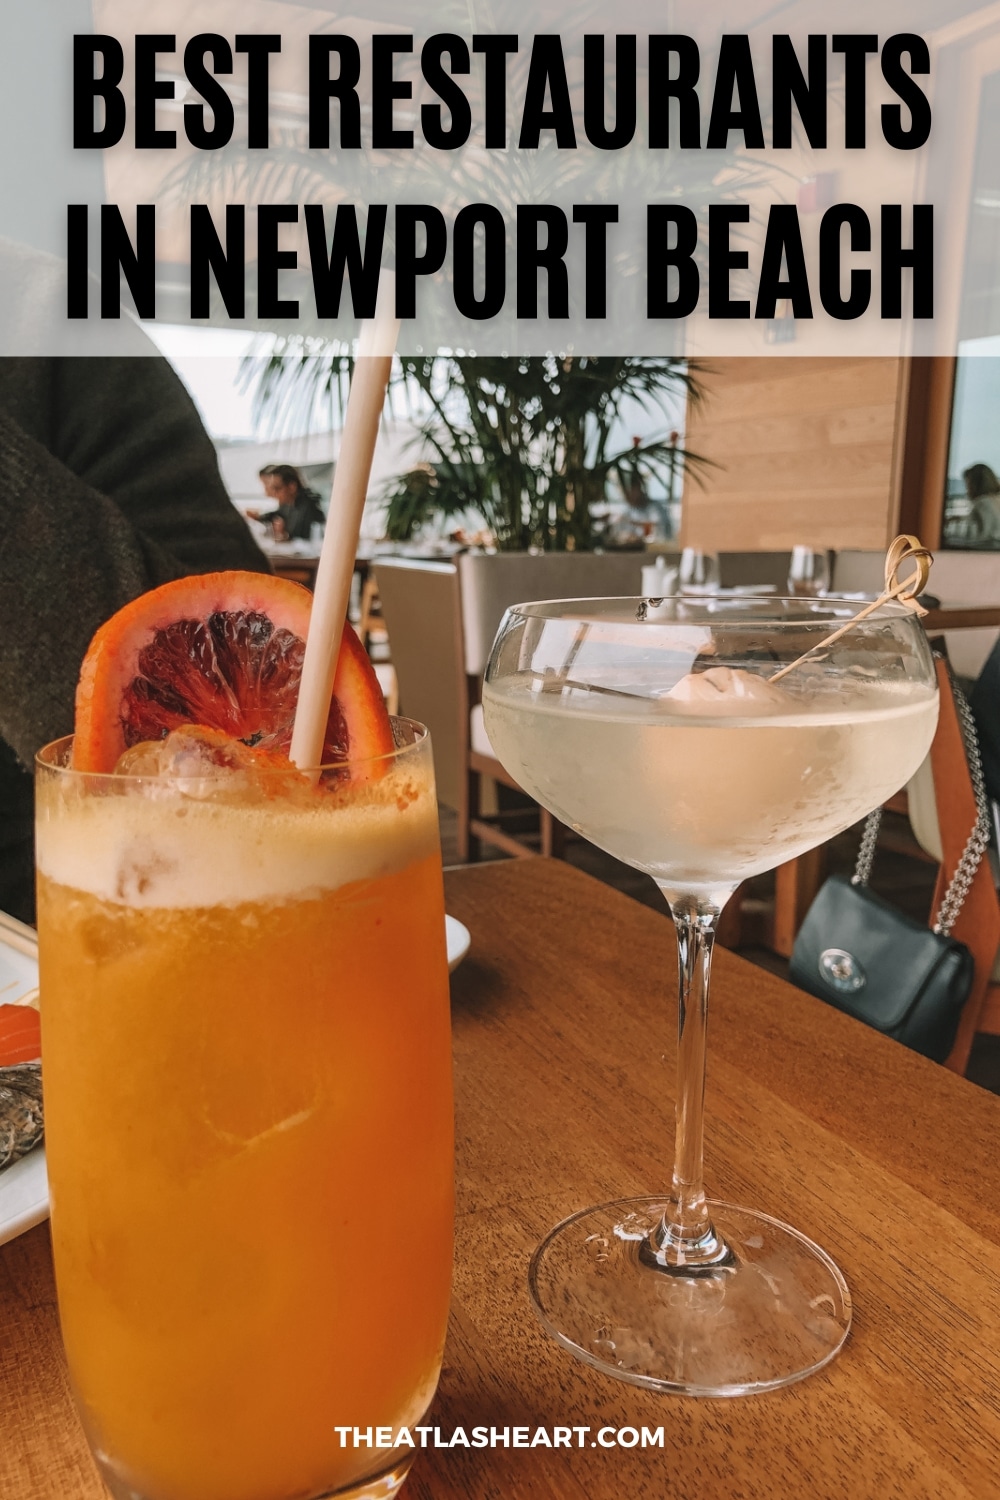 17 Best Restaurants in Newport Beach, California [Good Food & Waterfront Views]